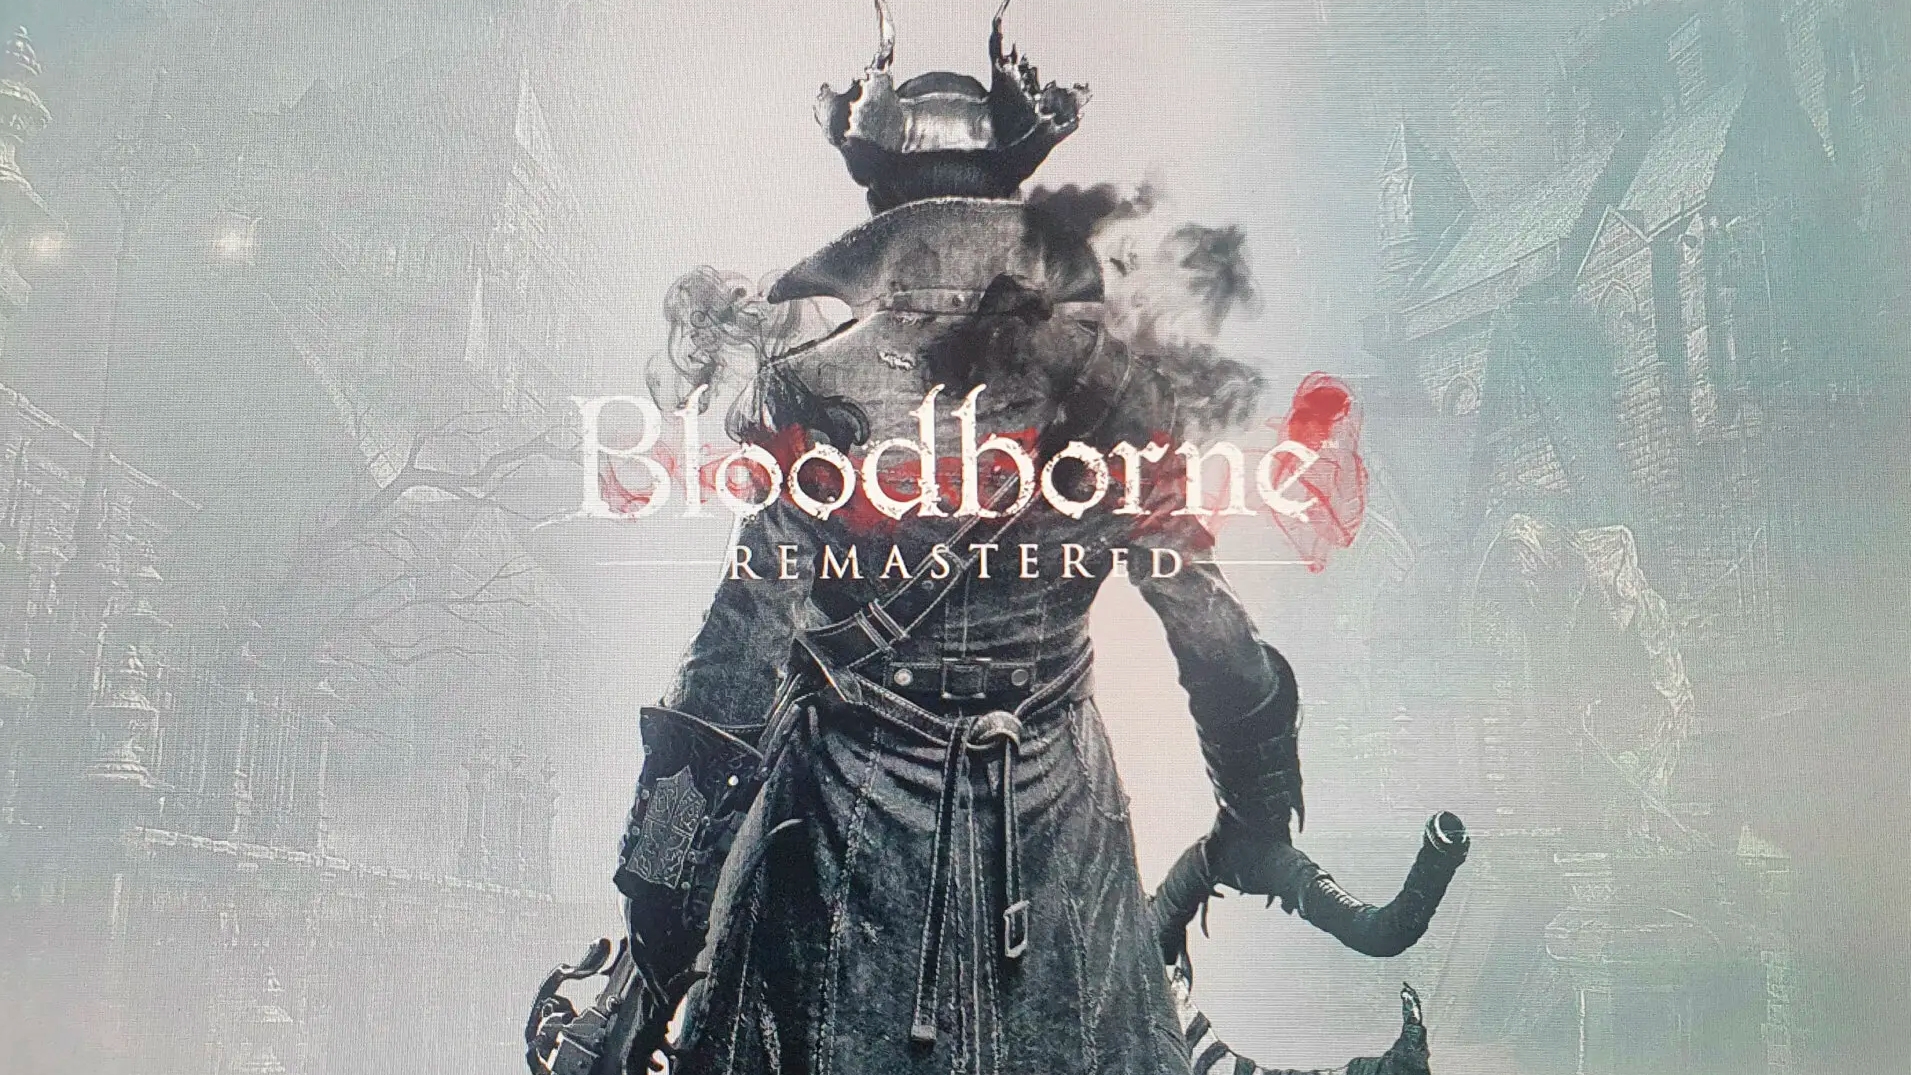 Bloodborne finally on pc? : r/BloodbornePC